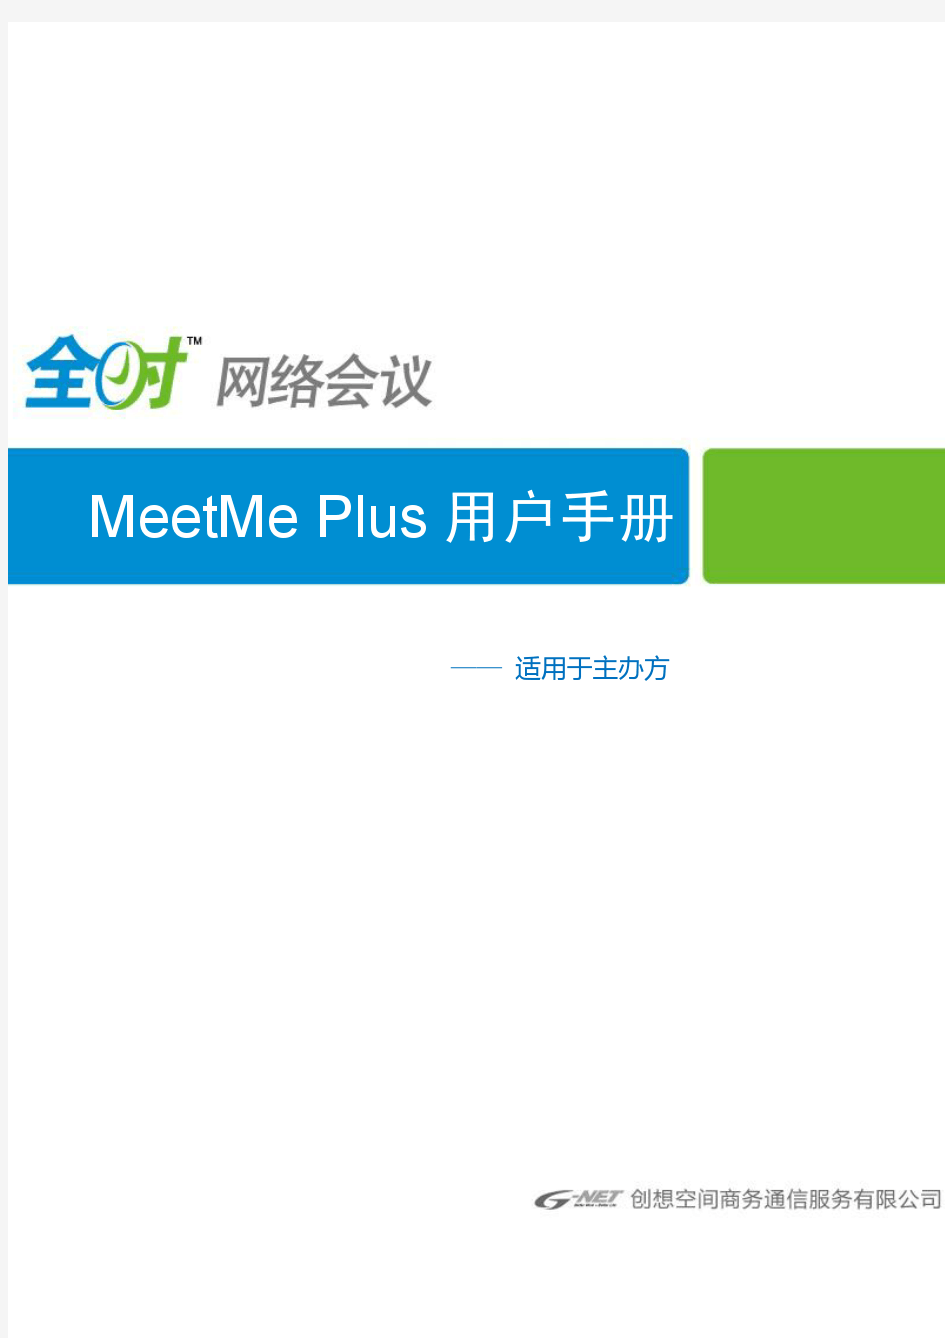 MeetMe Plus用户手册(主办方)主要功能